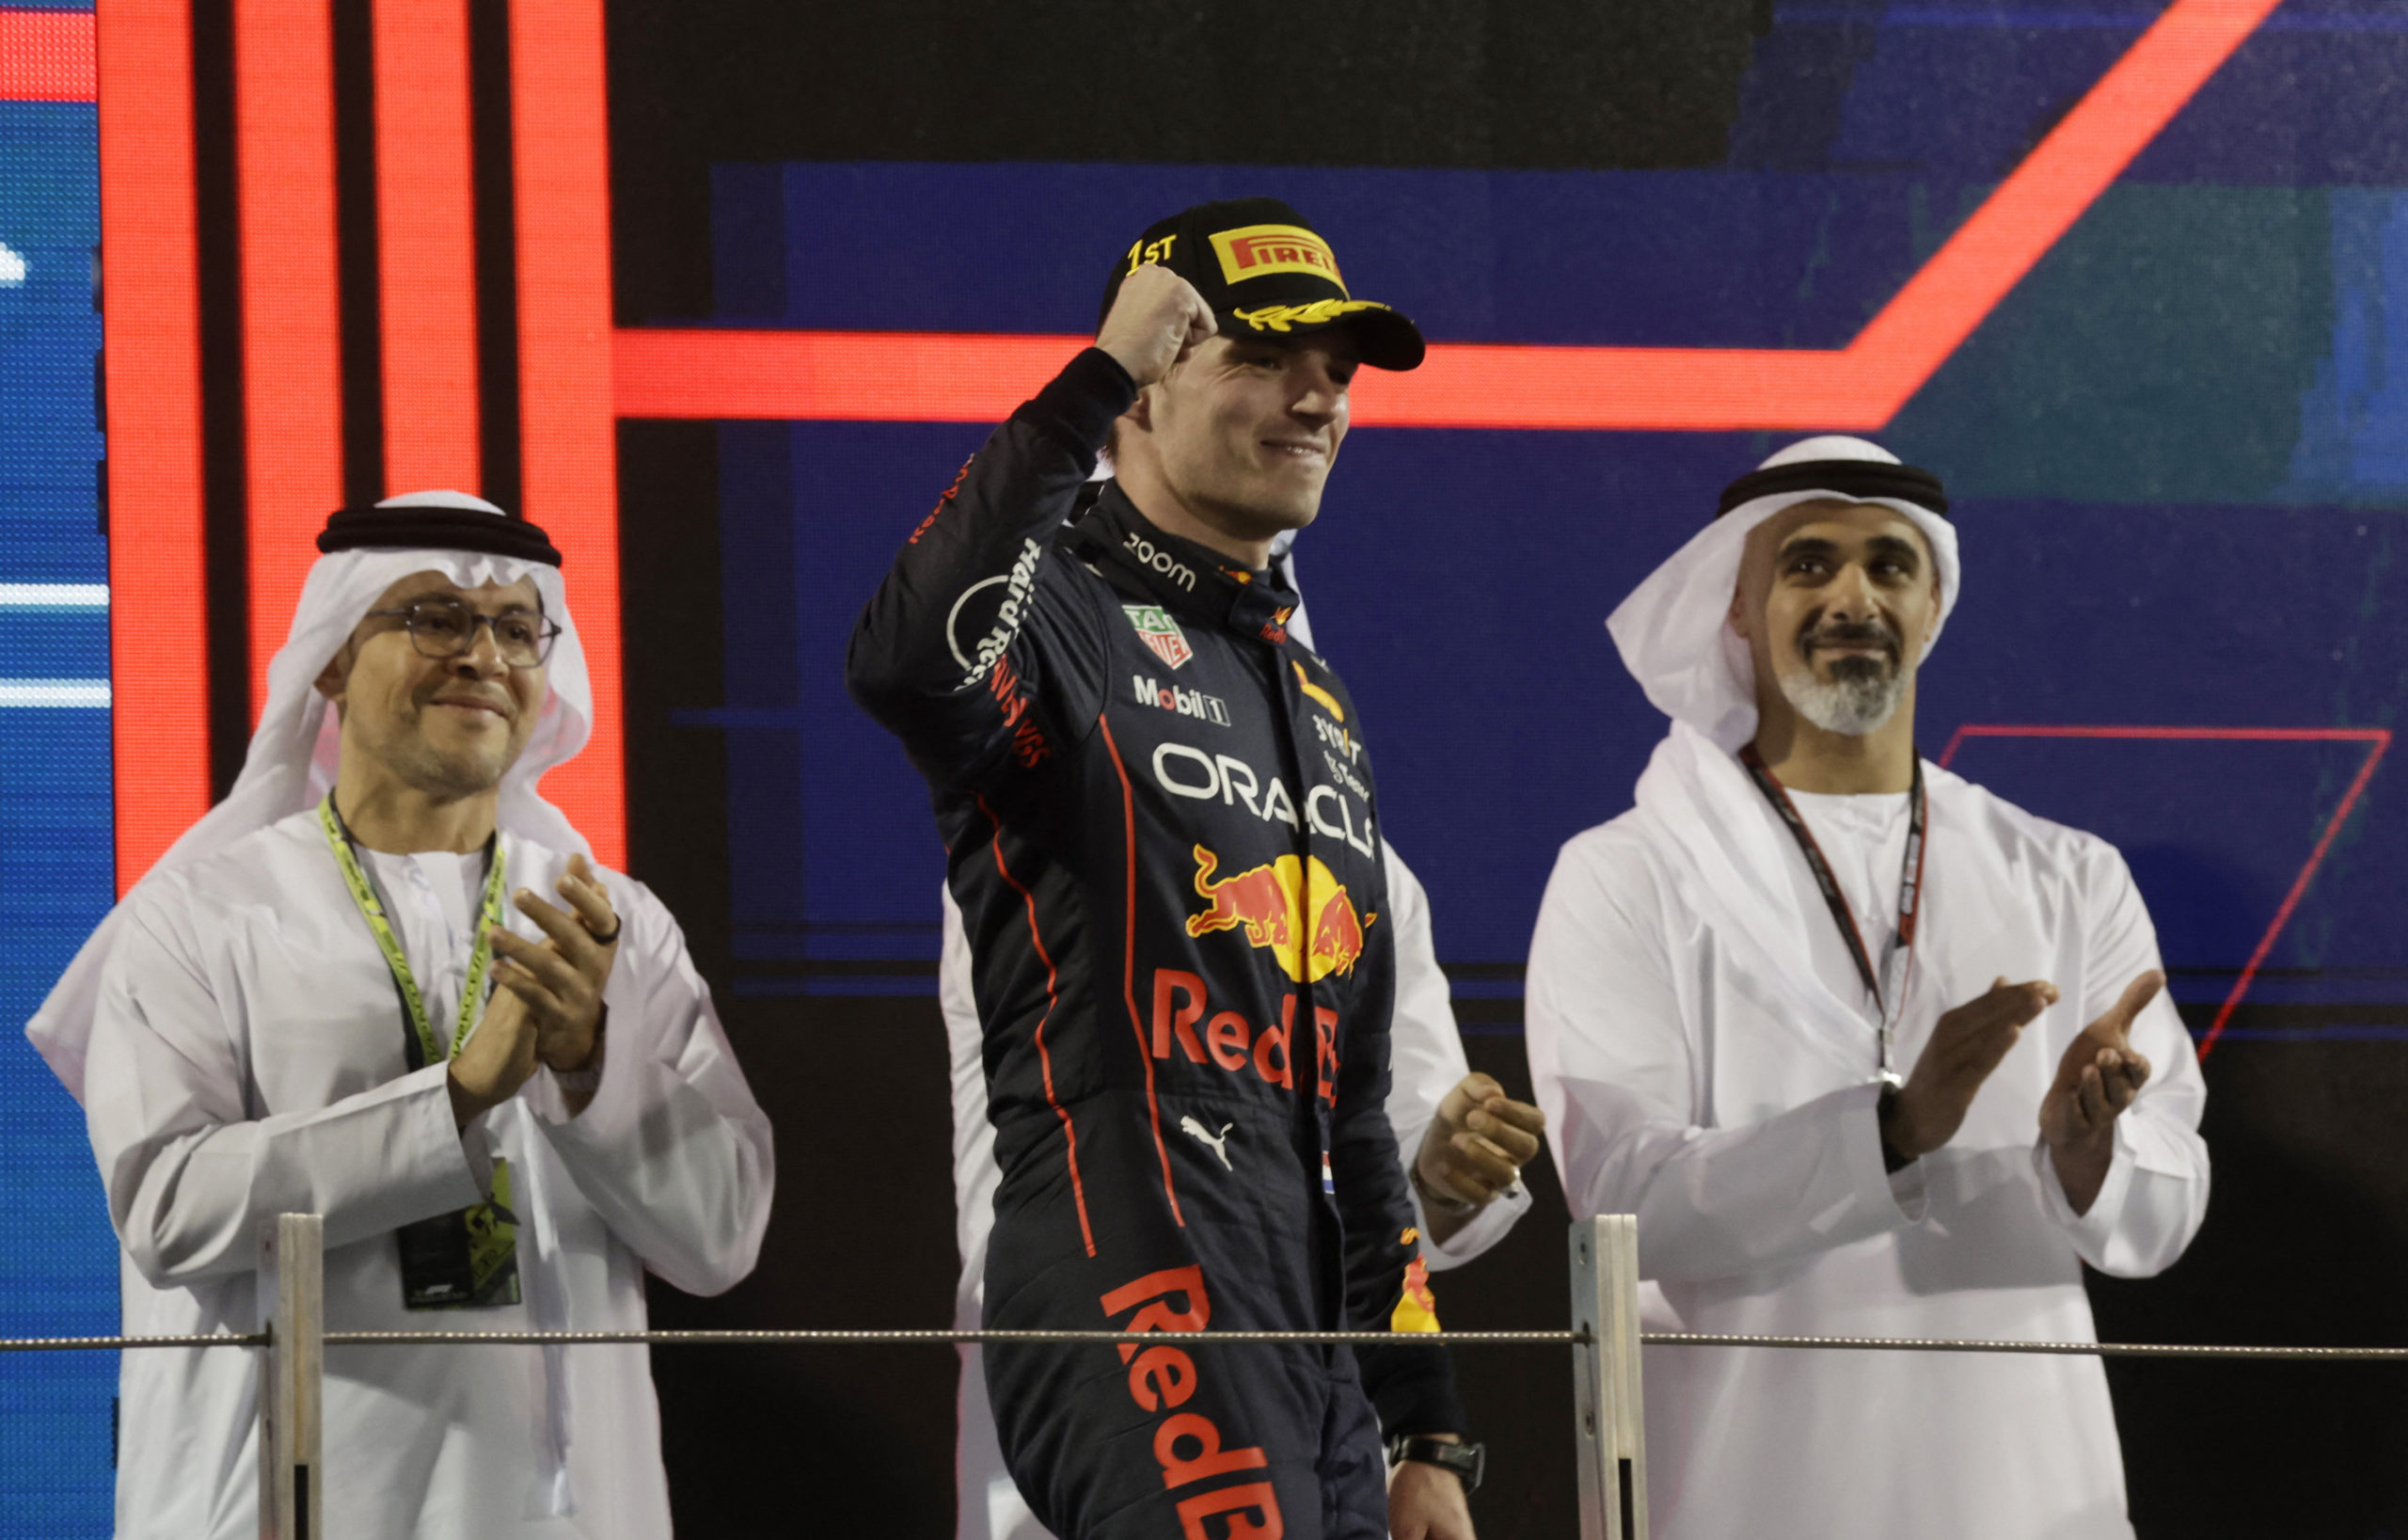 Formula One F1 - Abu Dhabi Grand Prix - Yas Marina Circuit, Abu Dhabi, United Arab Emirates - November 20, 2022 Red Bull's Max Verstappen celebrates on the podium after winning the Abu Dhabi Grand Prix 